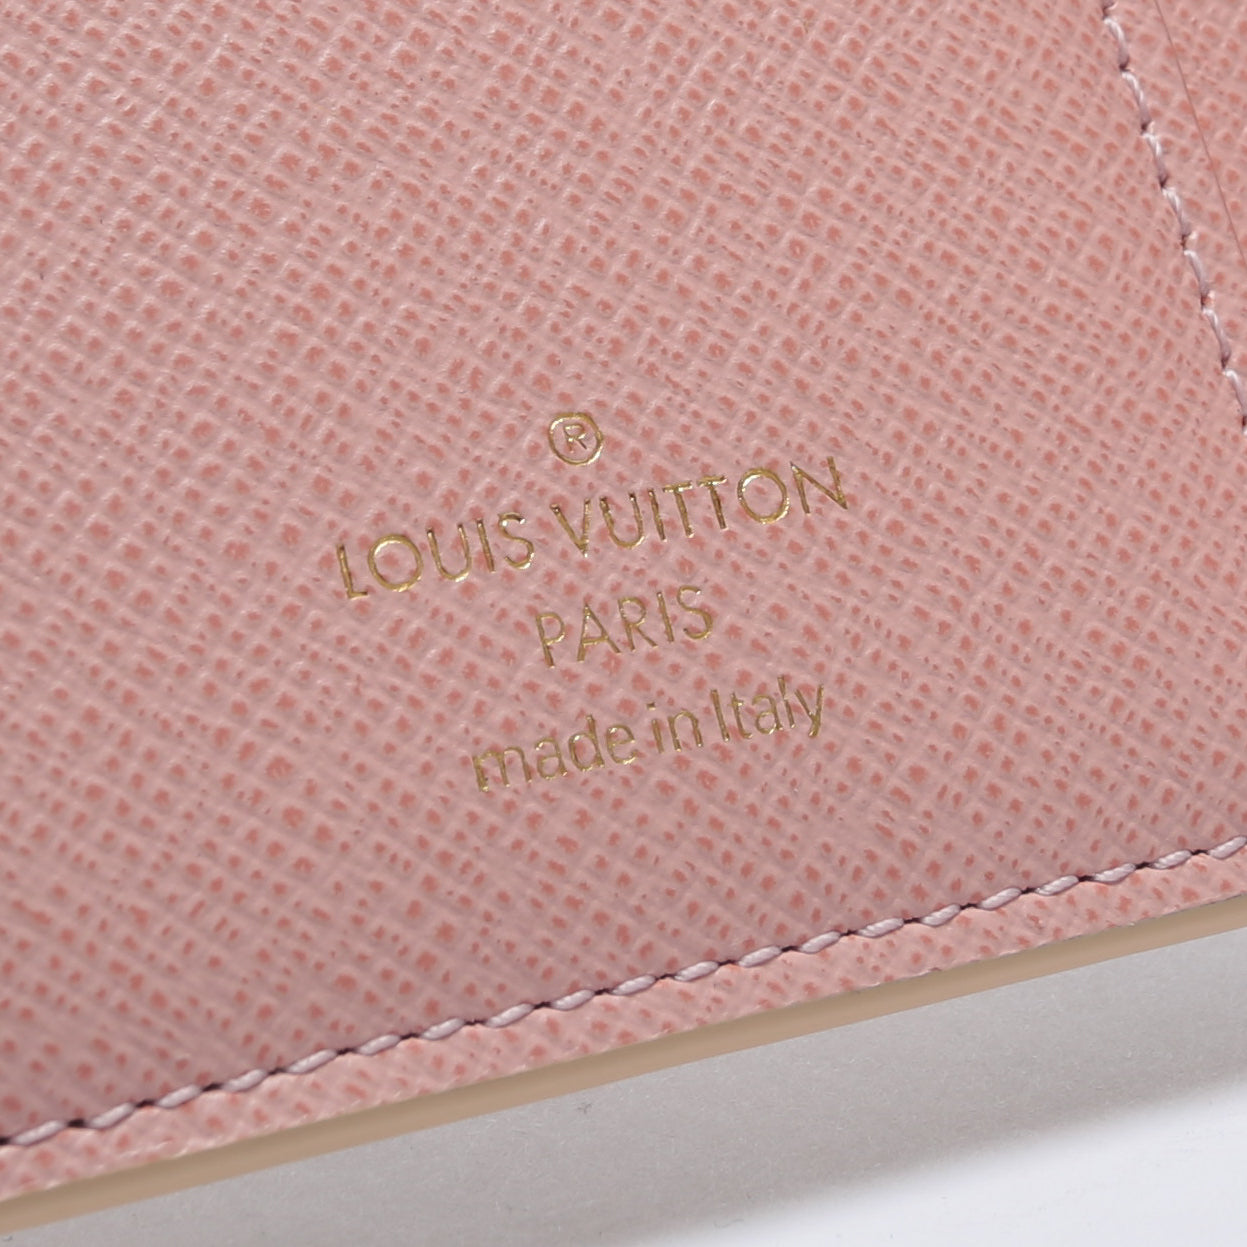 Louis Vuitton Damier Azur Emilie Wallet. Made in Spain.